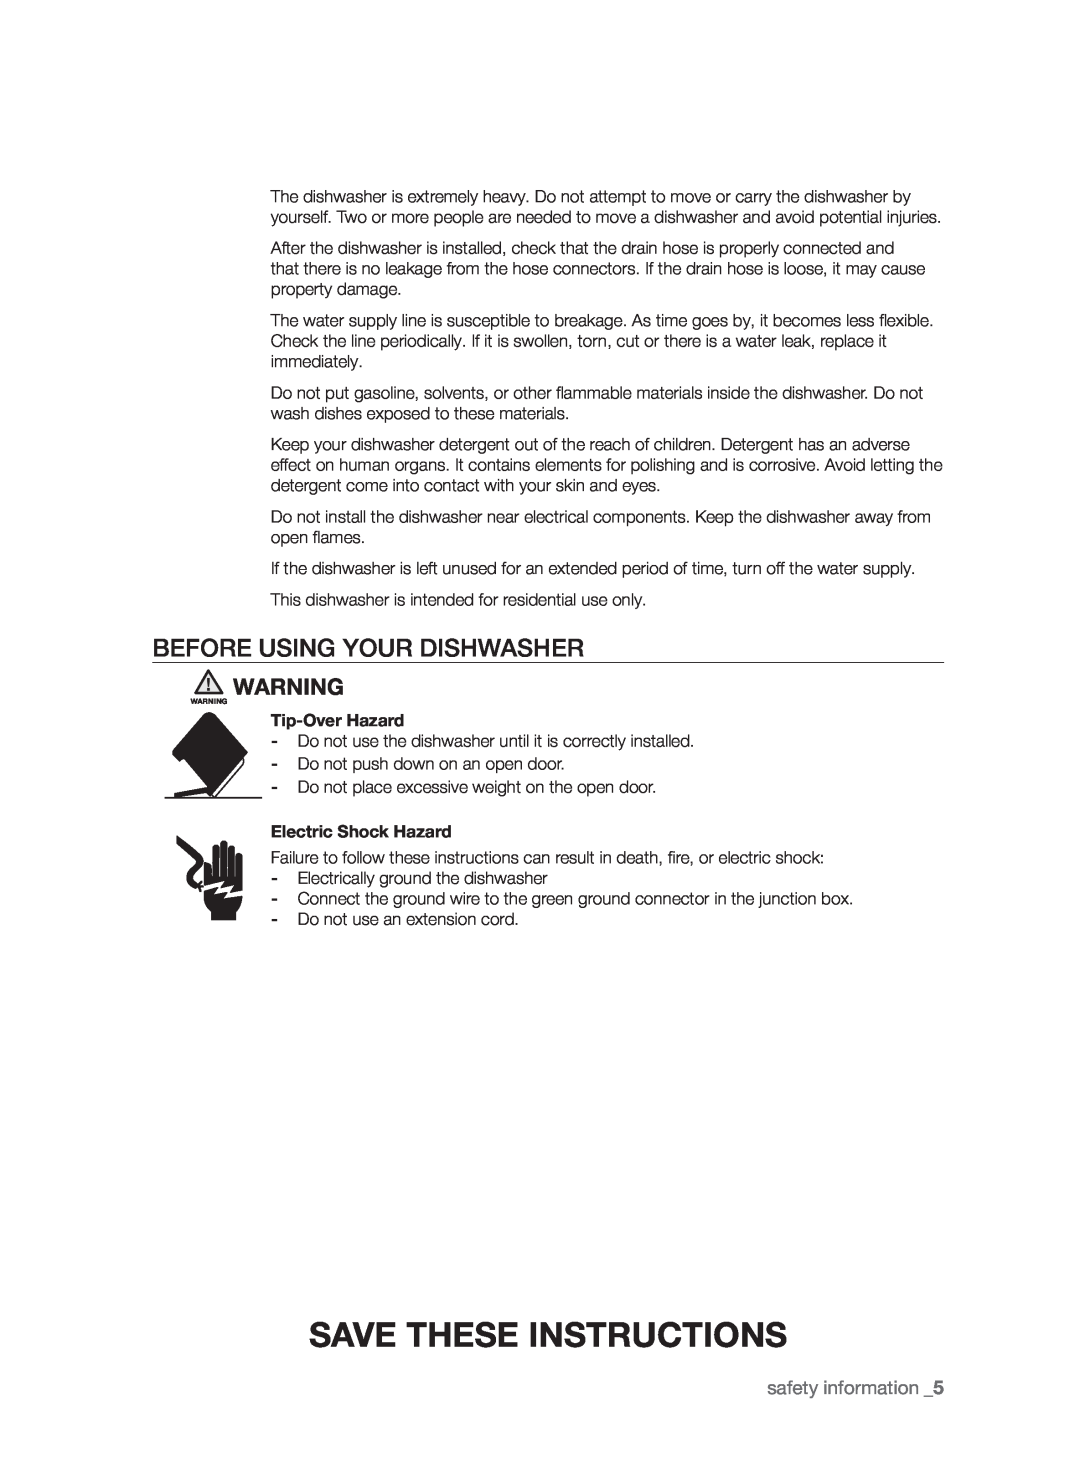 Samsung DMR57LHB, DMR57LHS Before using your dishwasher, safety information , Tip-Over Hazard, Electric Shock Hazard 